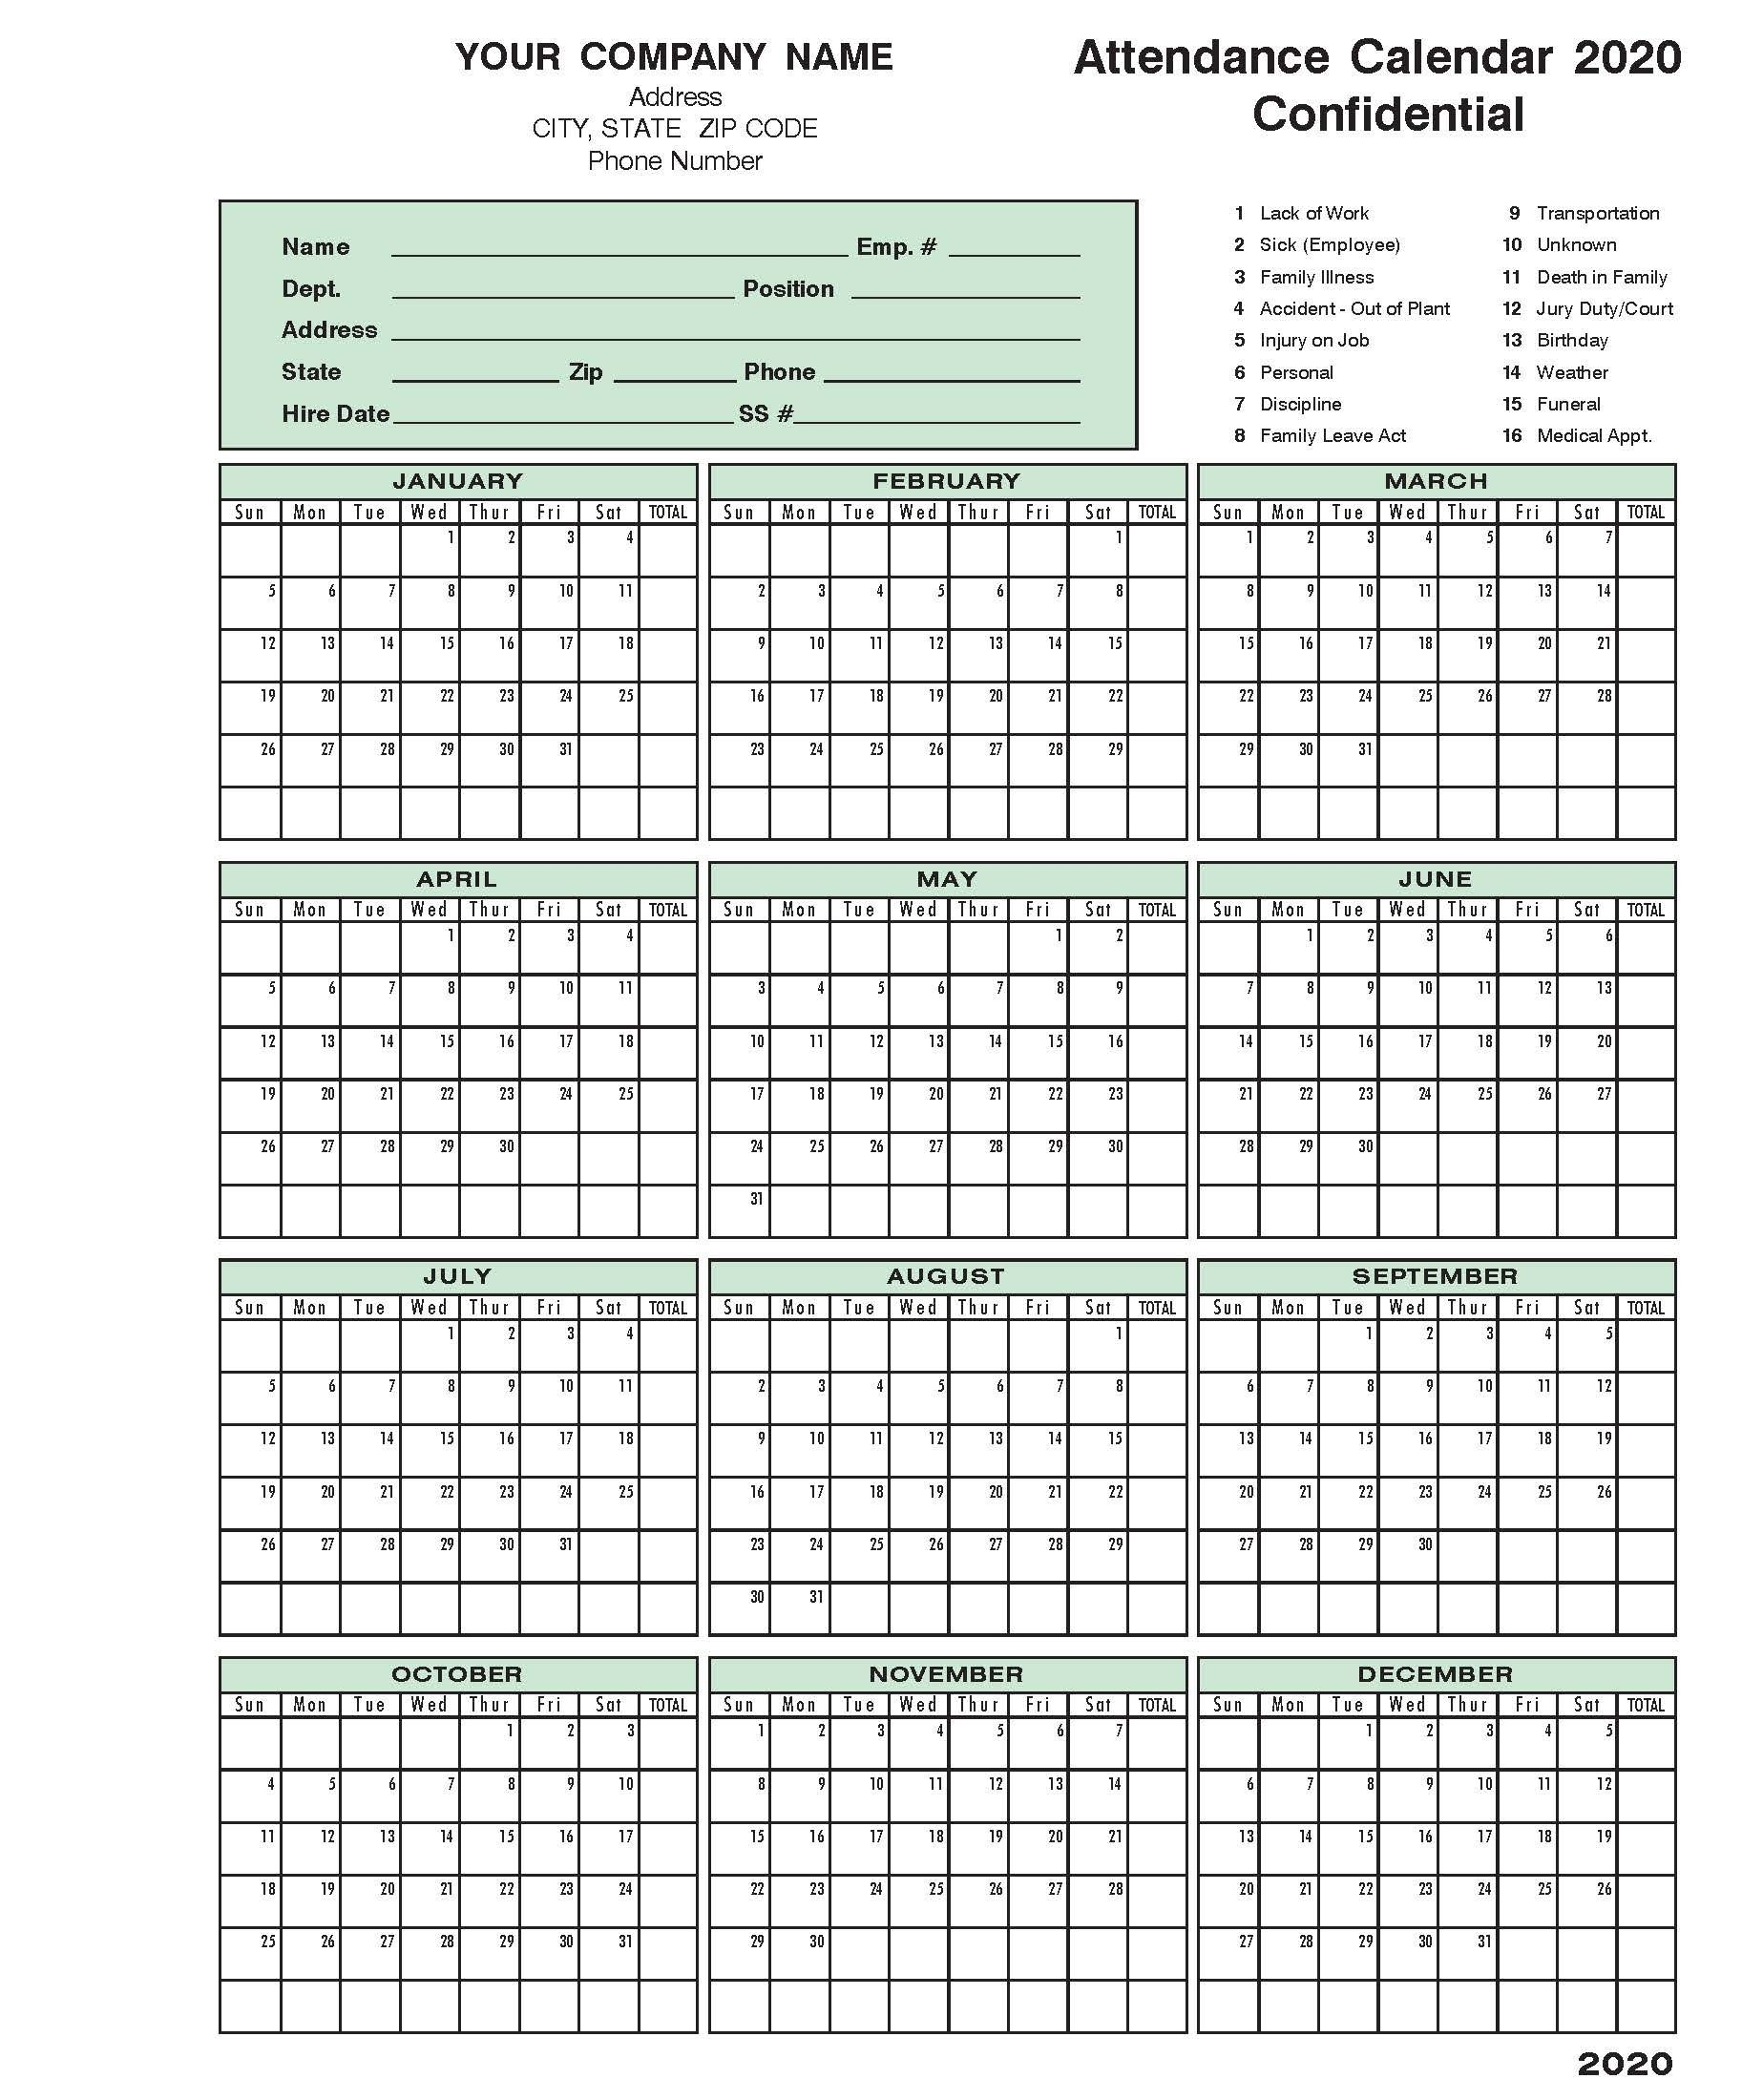 2020 Attendance Calendar In 2020 | Calendar 2020, Excel intended for Employeee Attendance Calendar For 2020